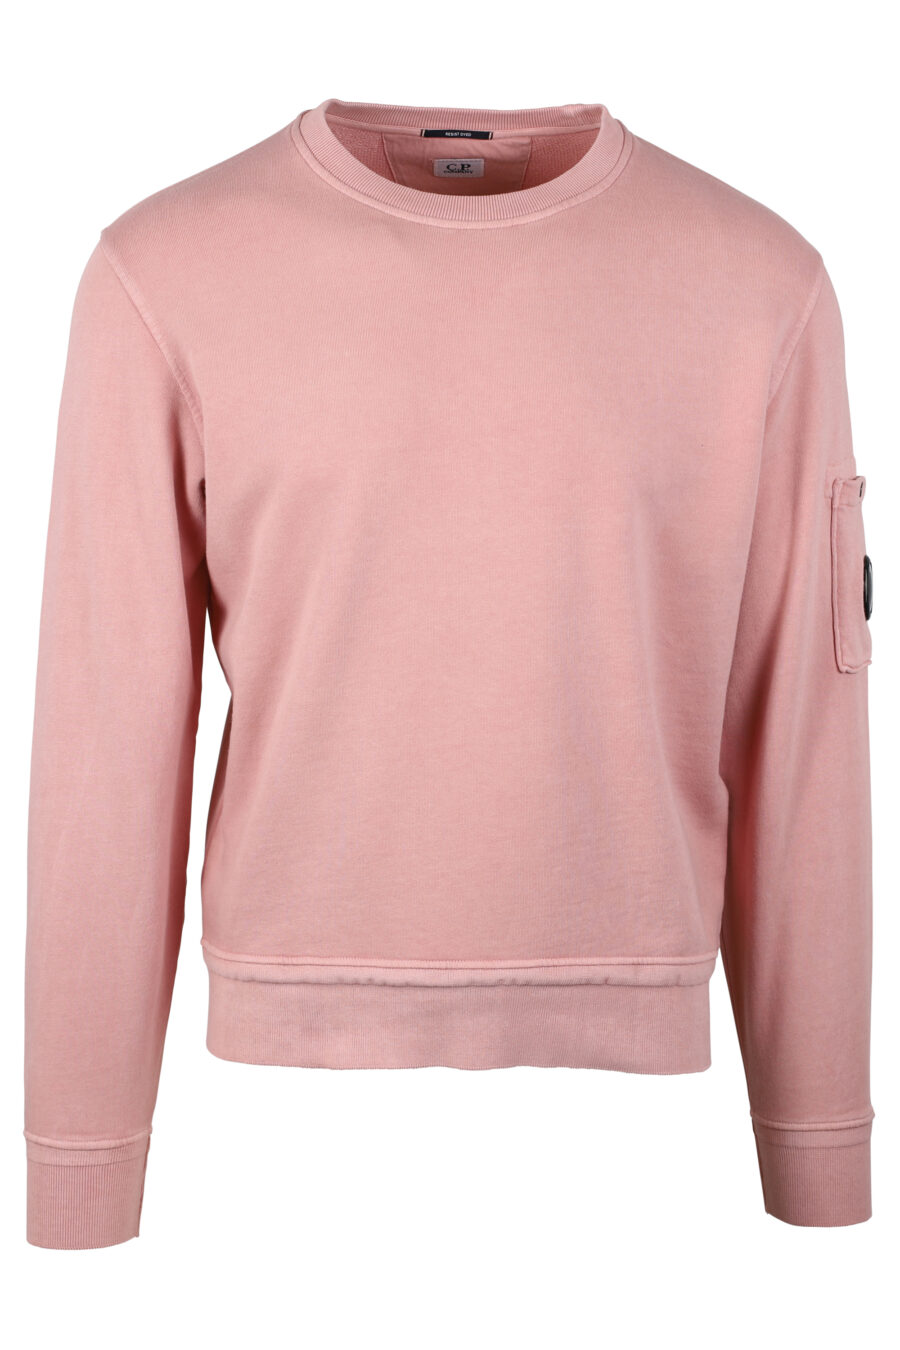 Pink sweatshirt with fleece lining and circular mini logo - IMG 4706